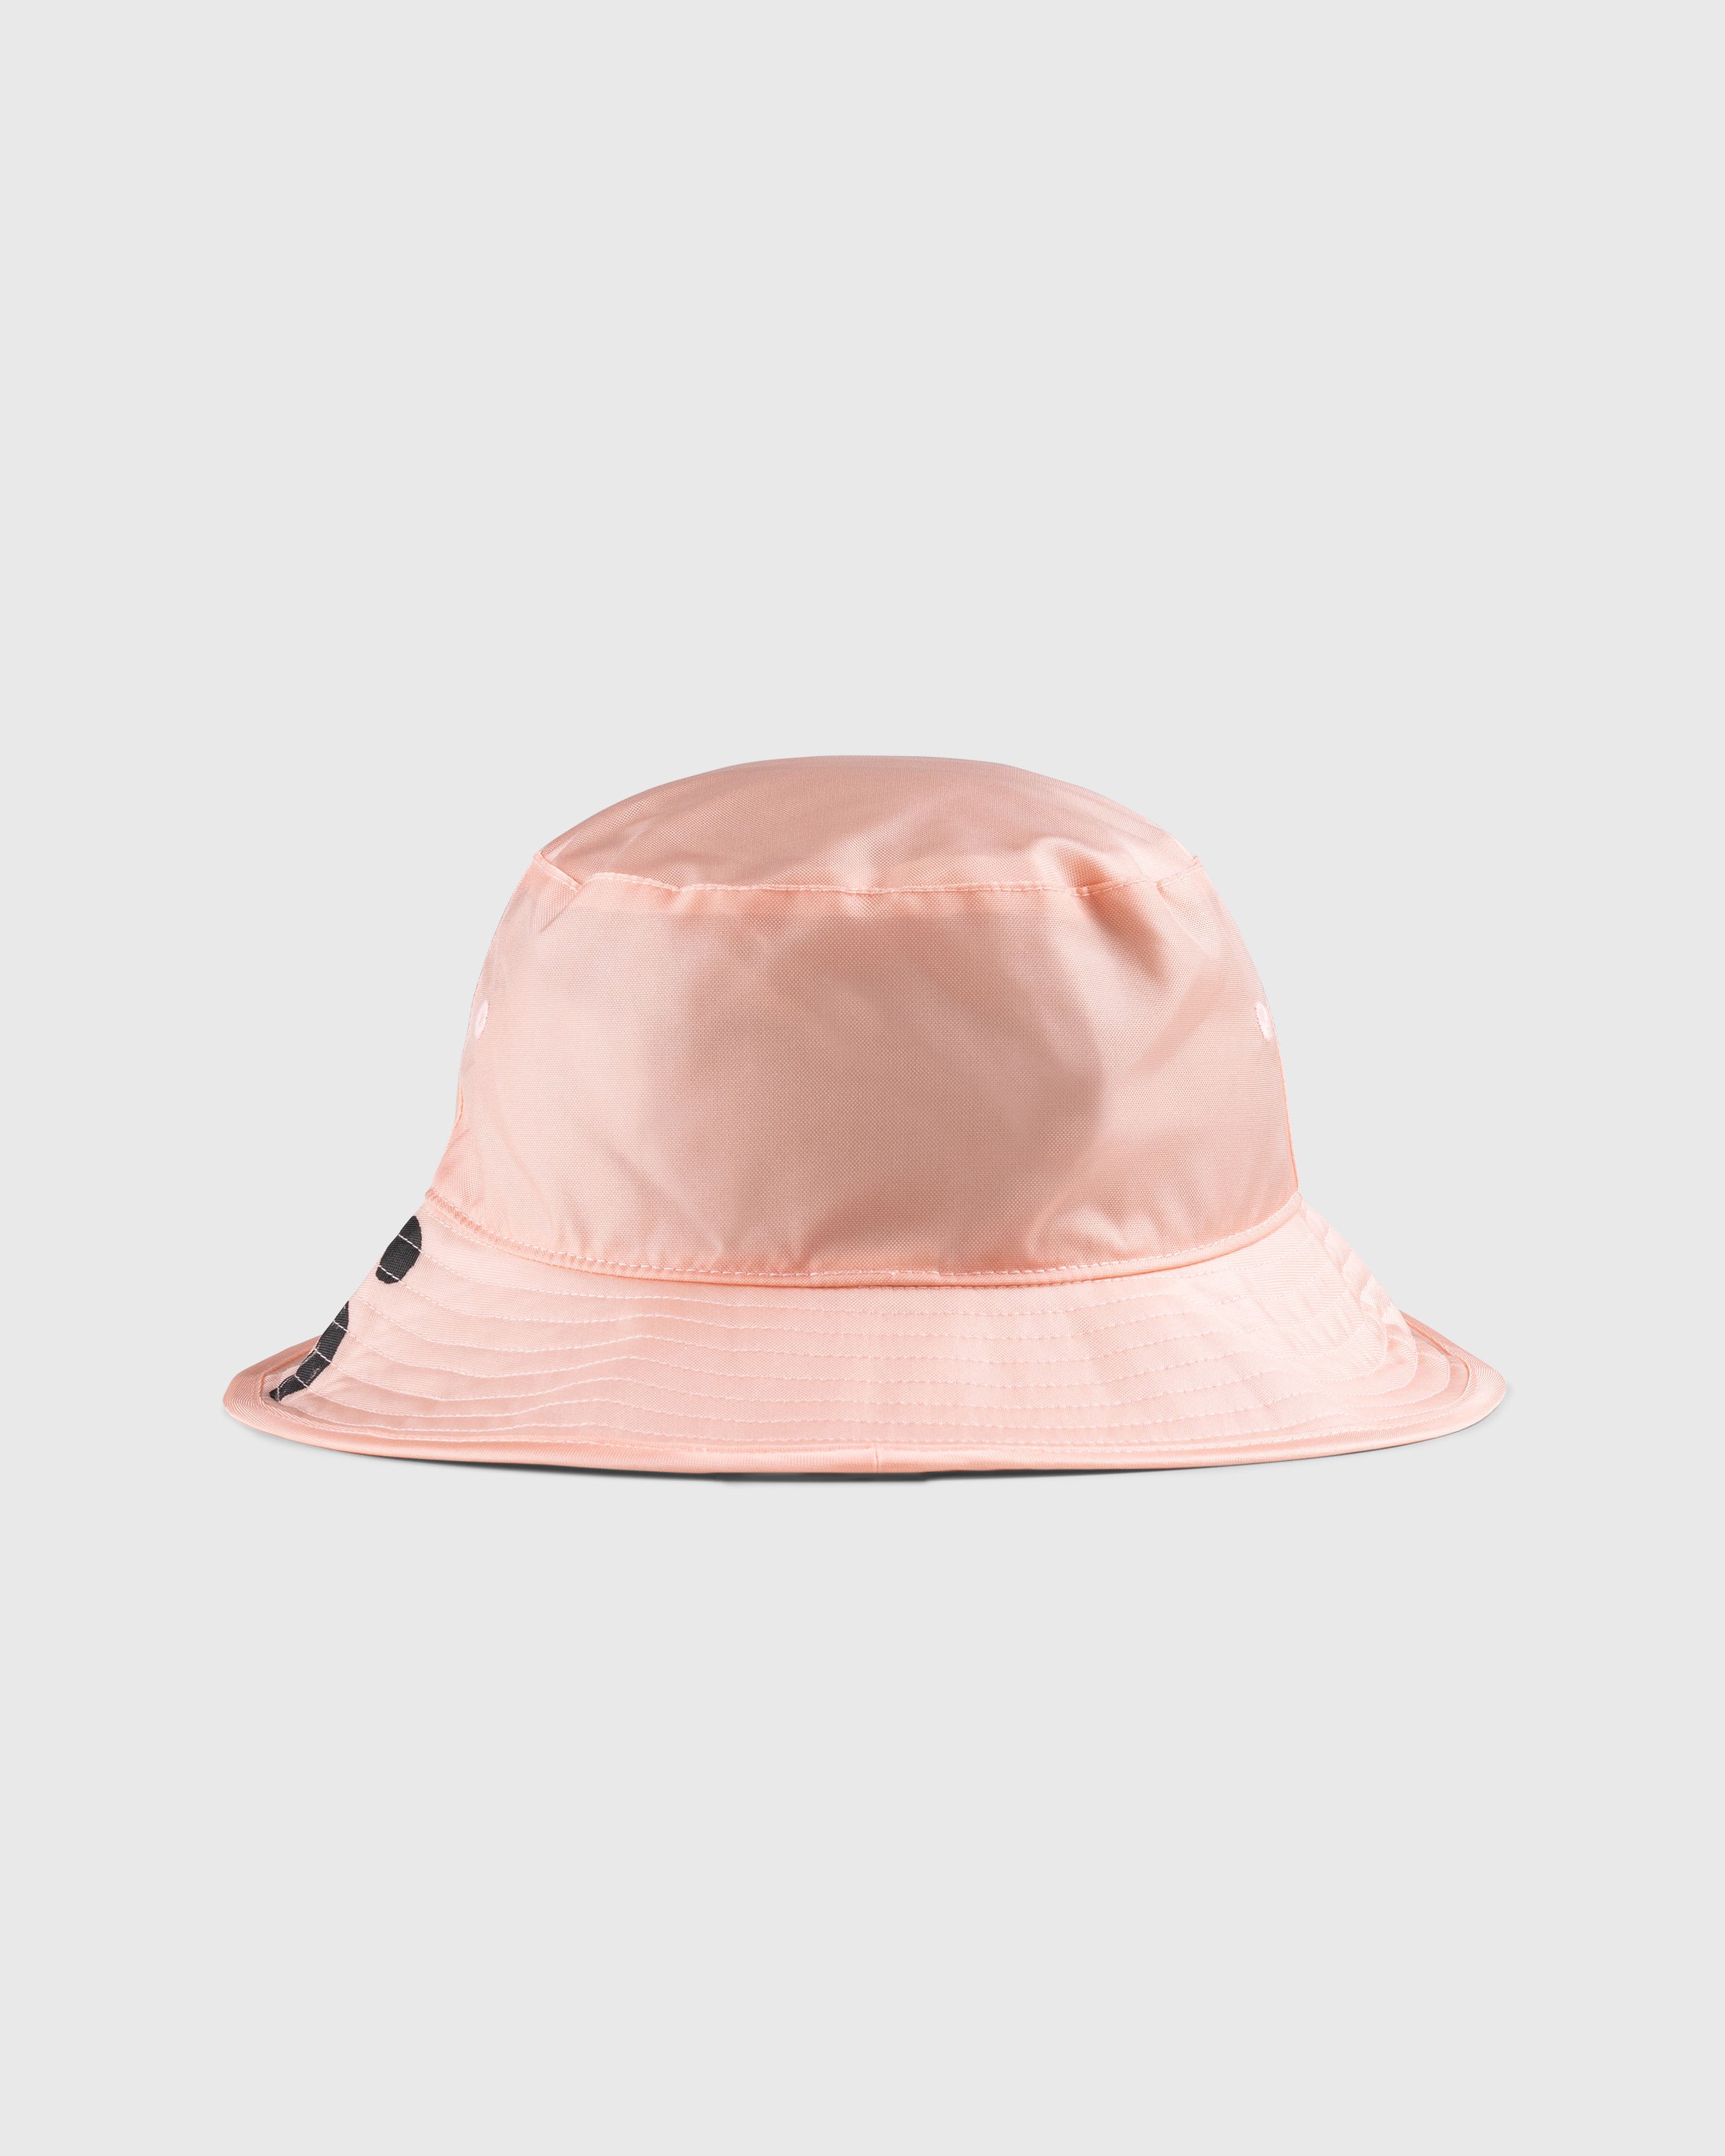 Acne Studios - Logo Bucket Hat Peach Pink - Accessories - Pink - Image 2